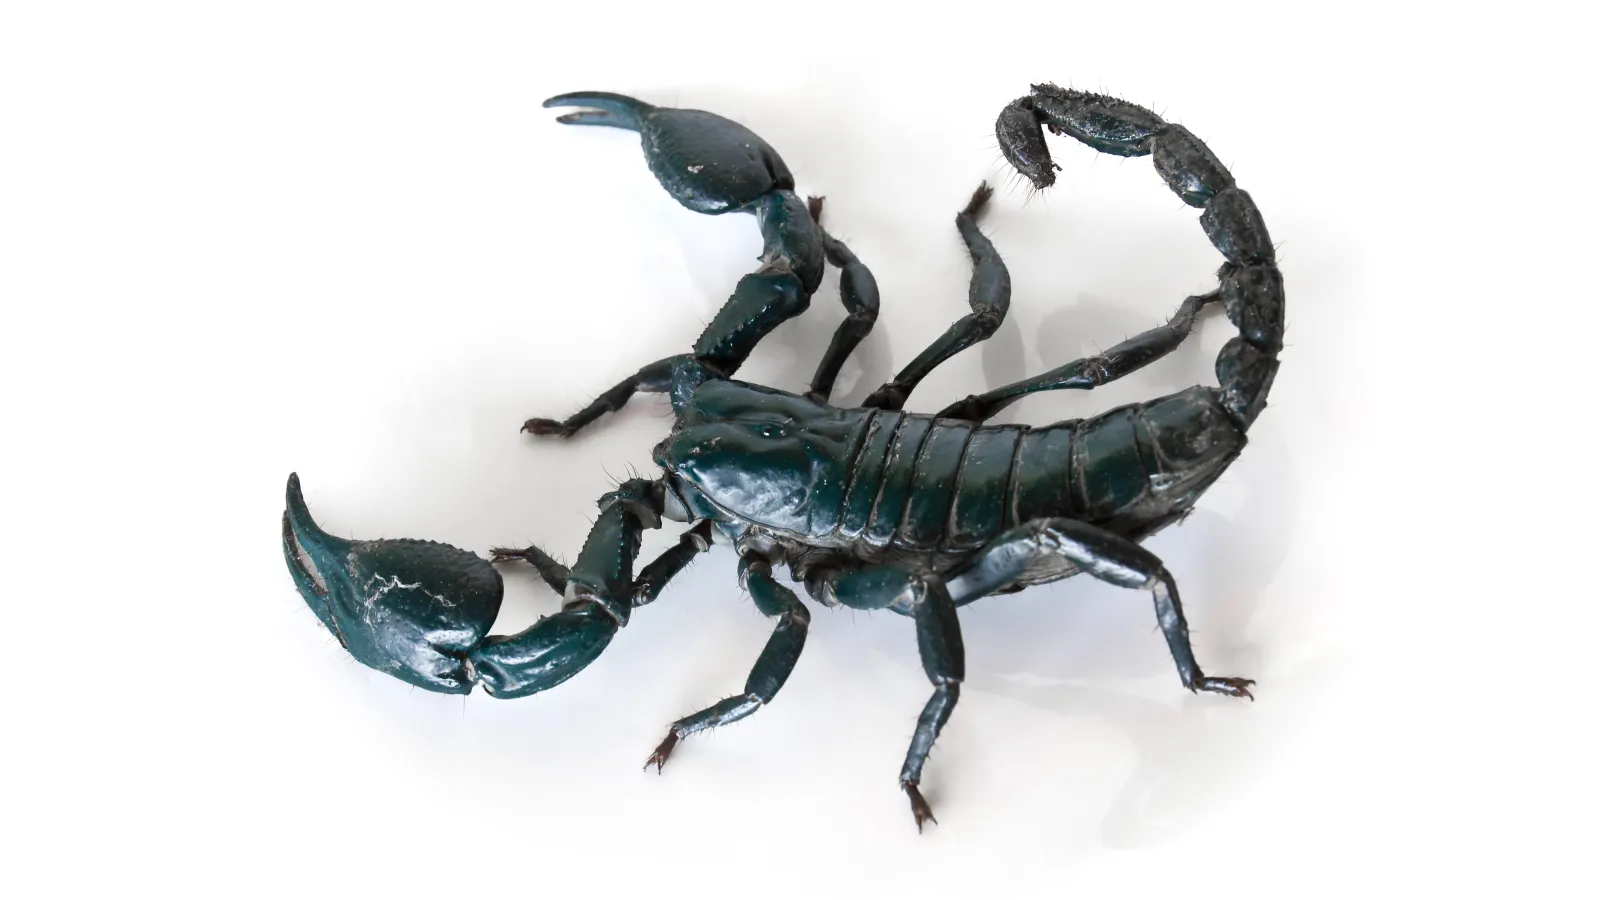 a close up of a scorpion